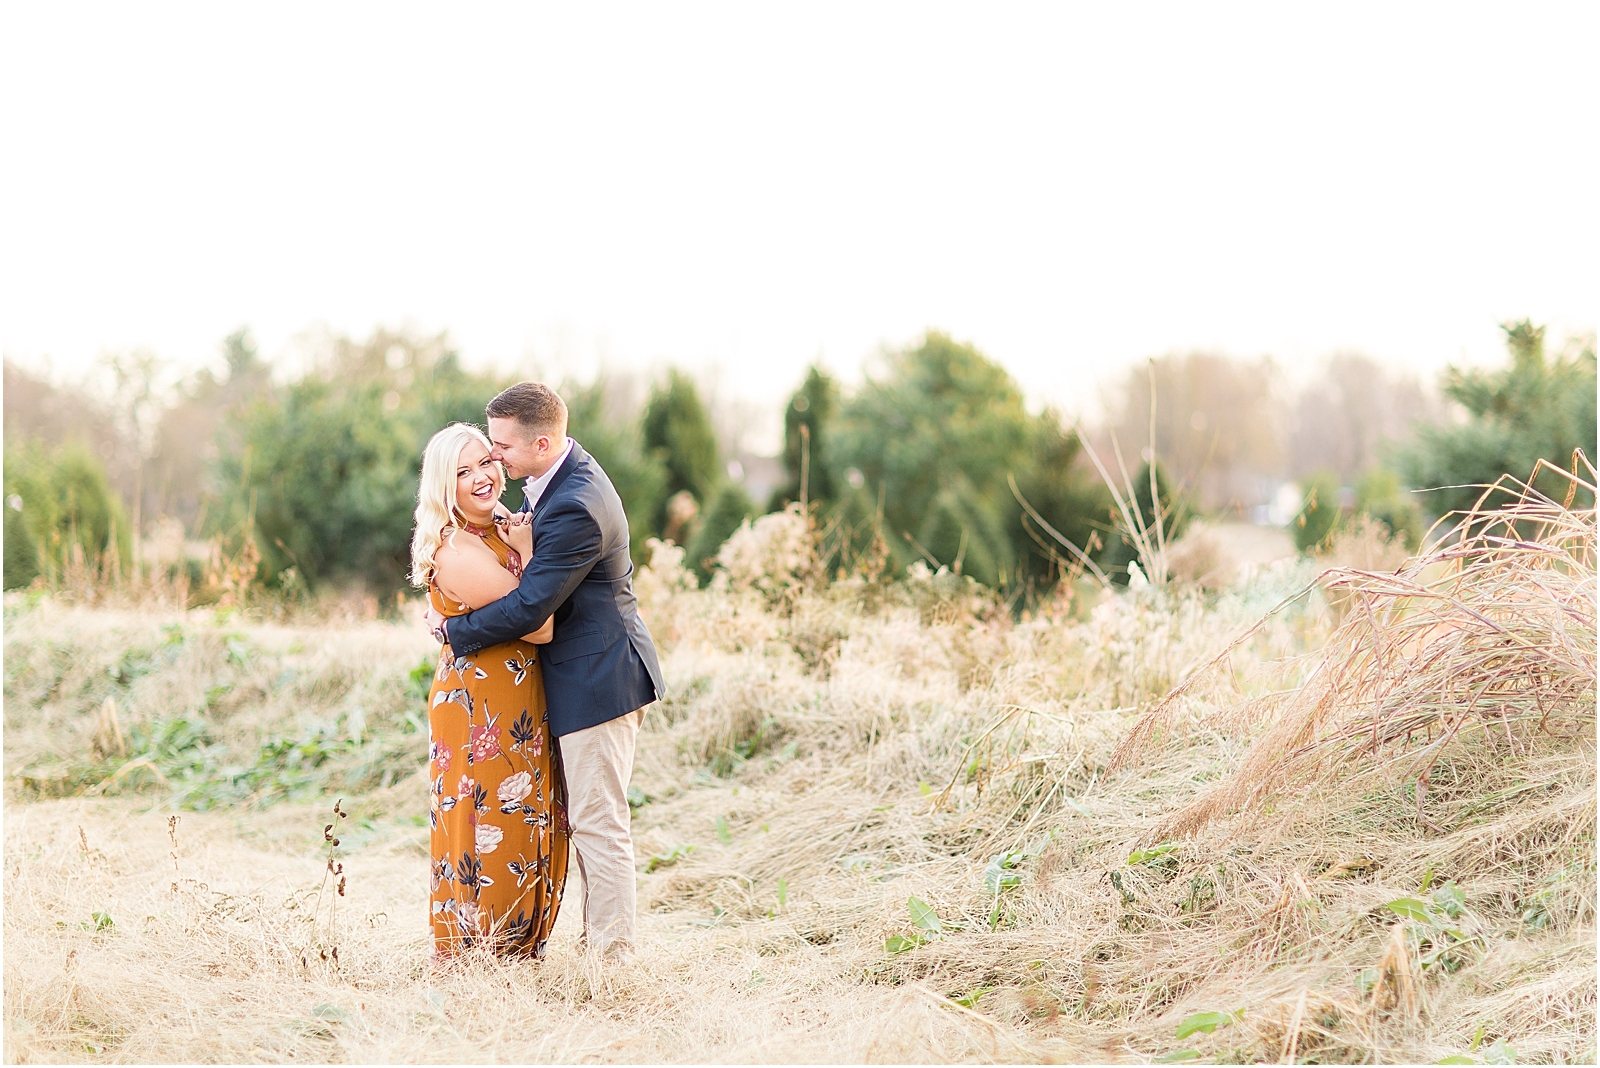 Haylee and Dillon | Evansville Wedding Photographer0019.jpg